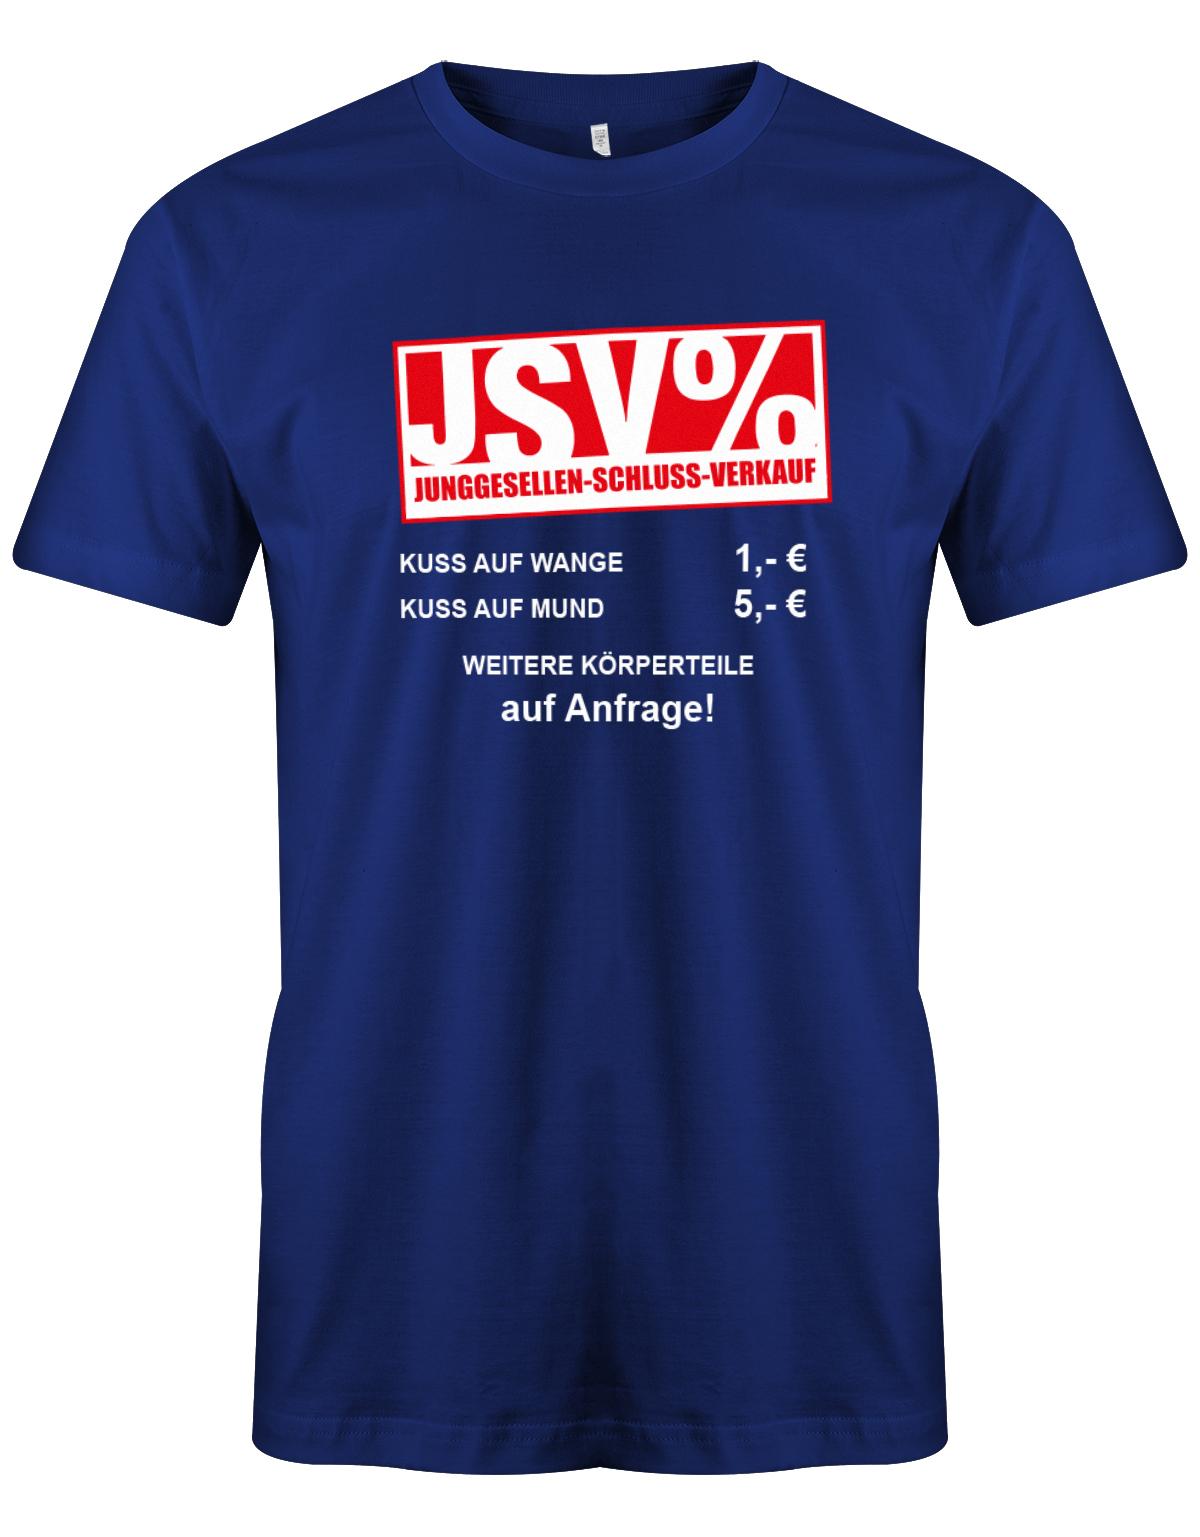 JSV-Kuss-auf-Wange-1-Euro-auf-Mund-5-Euro-Herren-JGA-Shirt-Royalblau